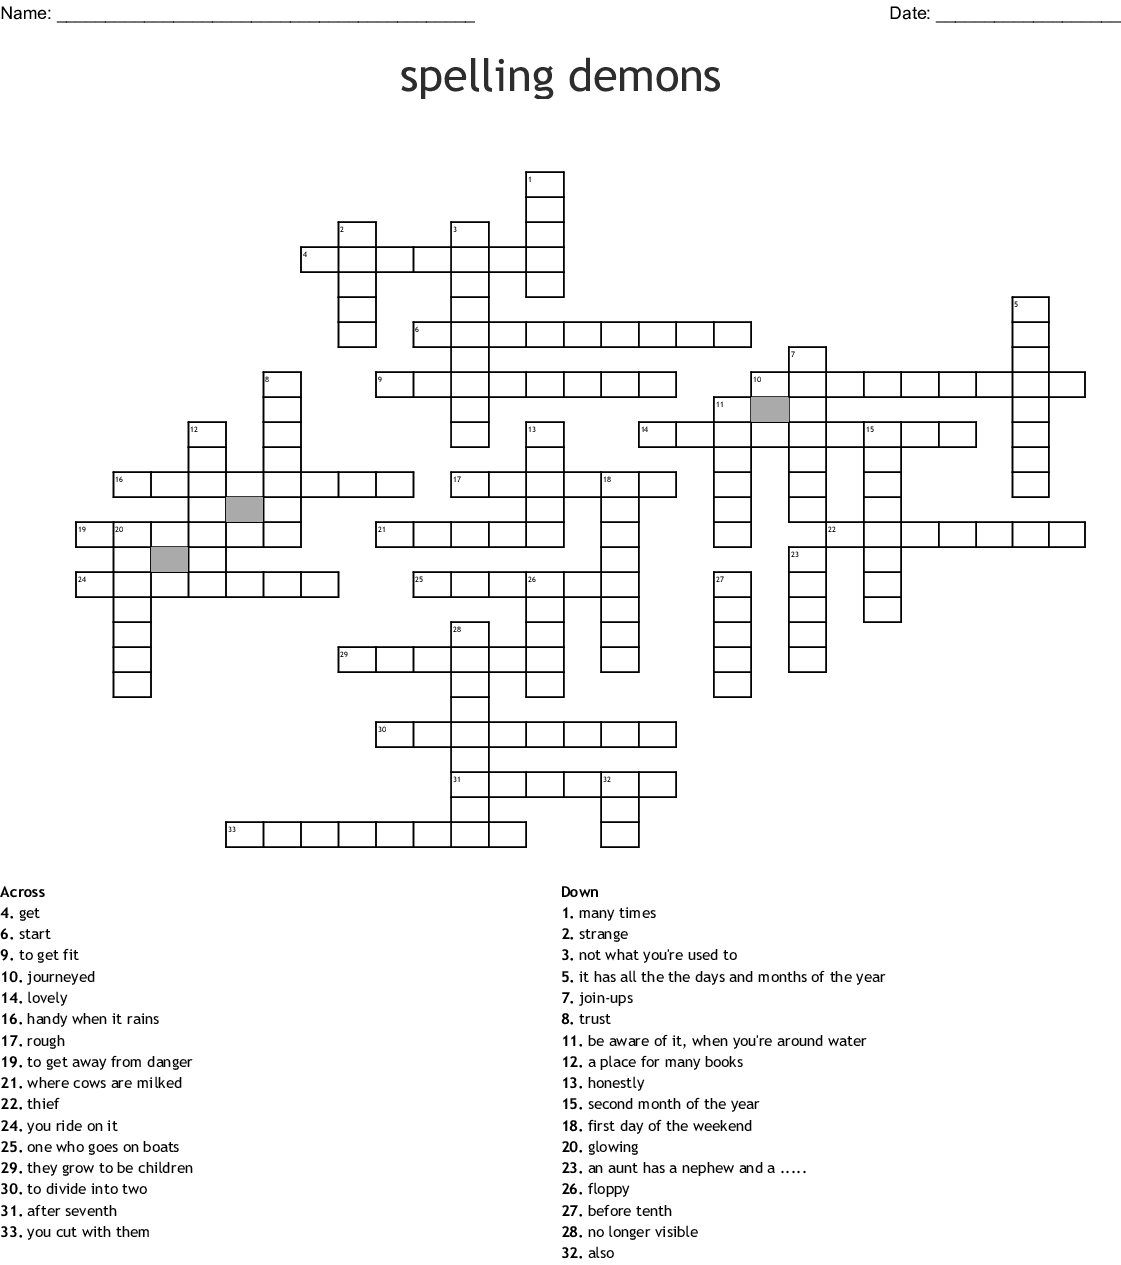 Spelling Demons Crossword  Word